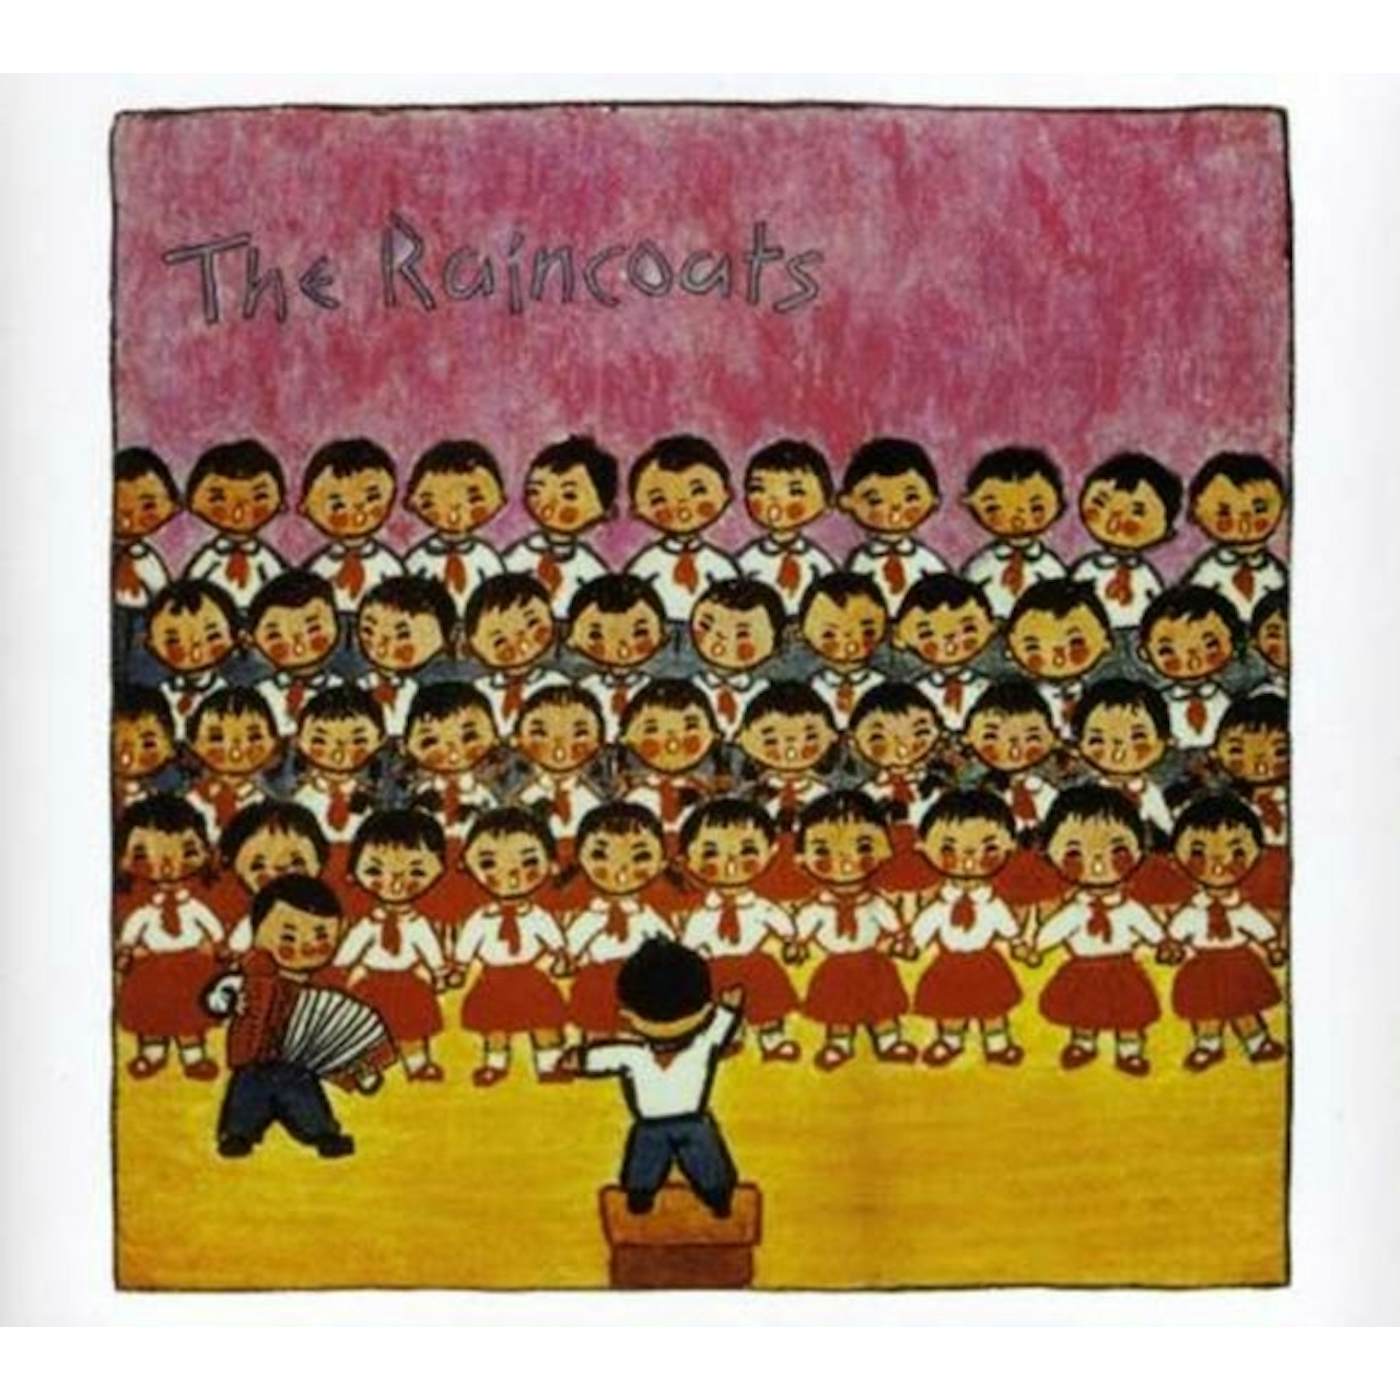 The Raincoats CD - Raincoats